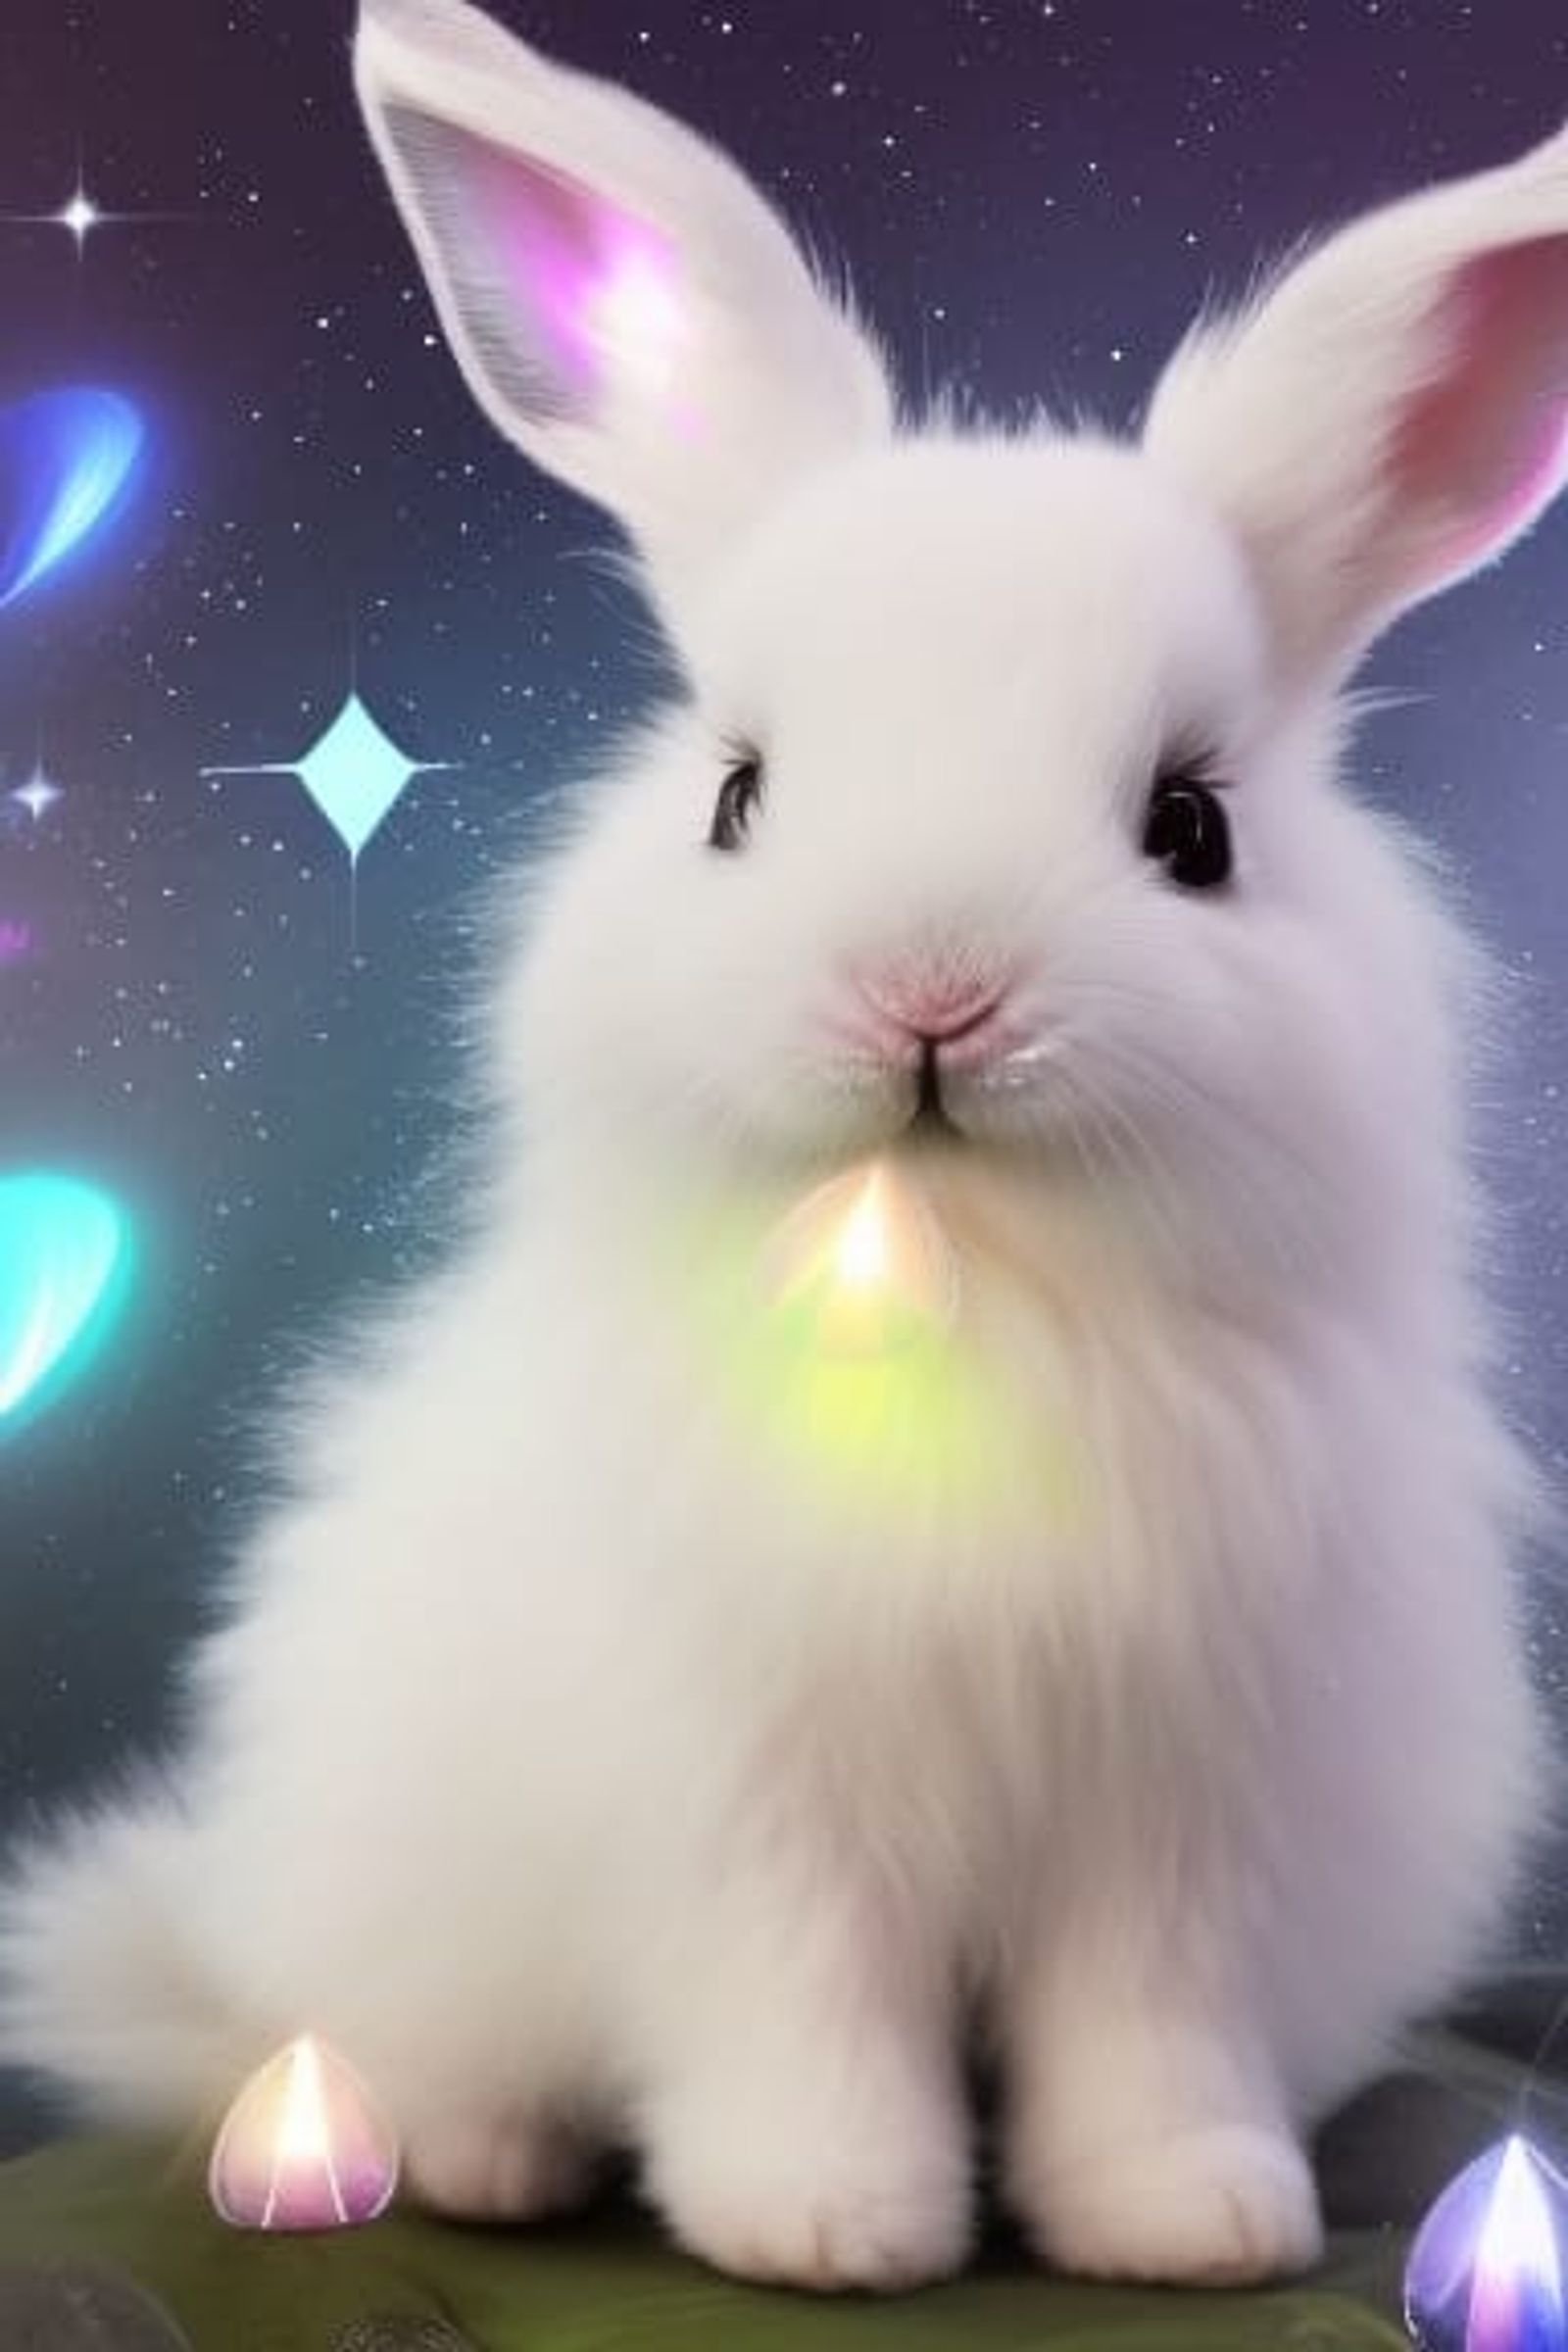 adorable fluffy baby bunnies